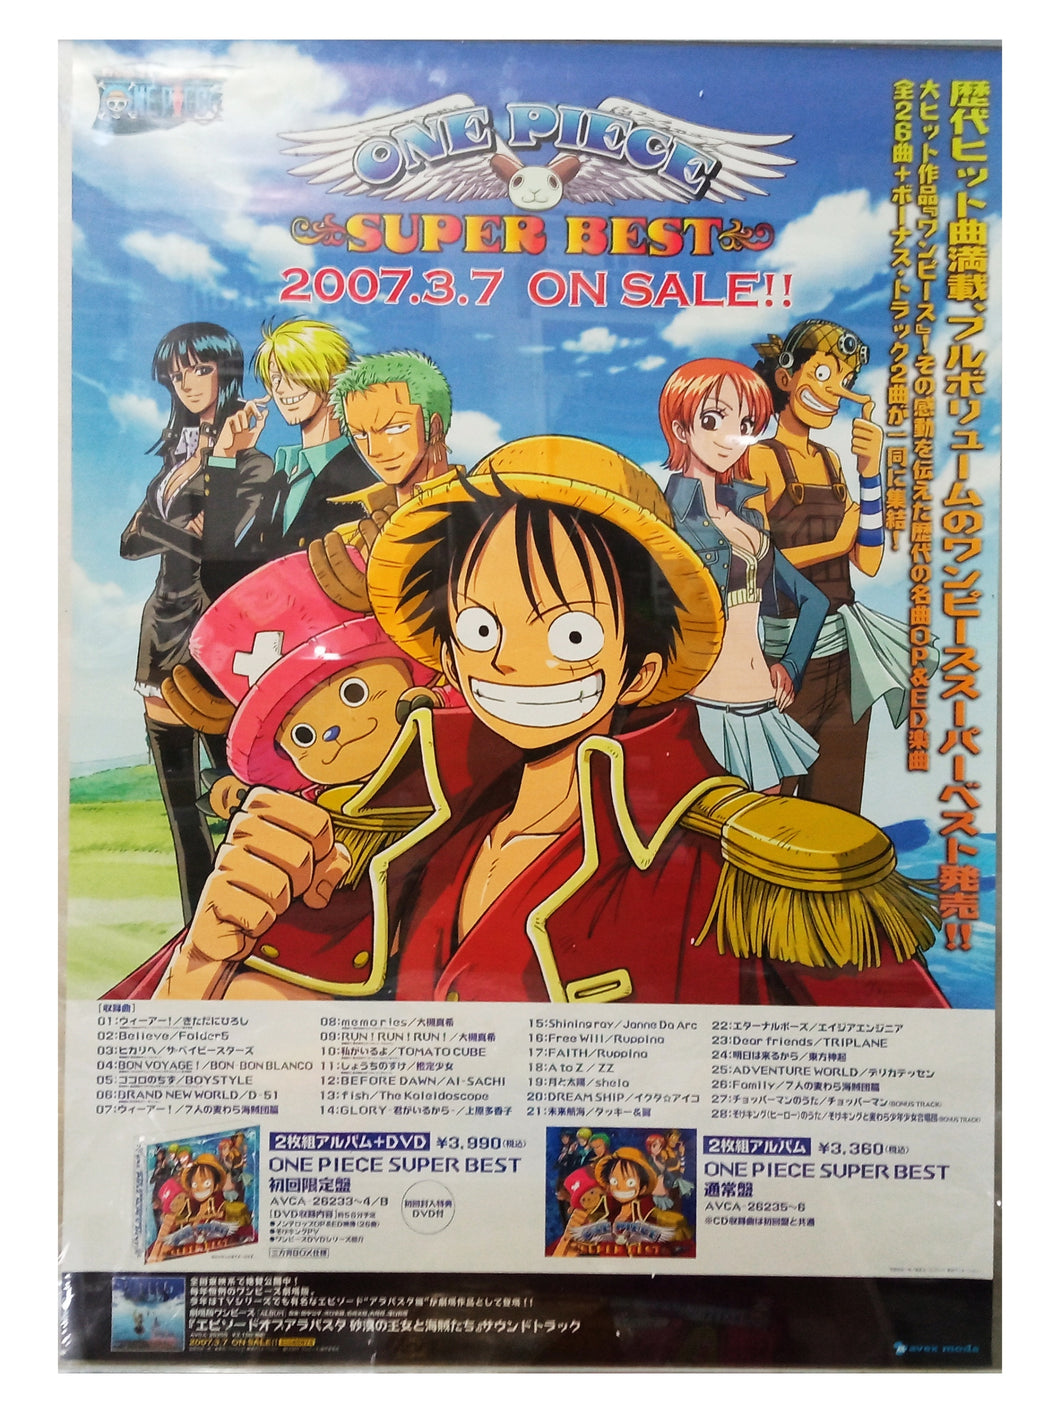 One Piece - SUPER BEST - B2 Announcement Poster
- Promo